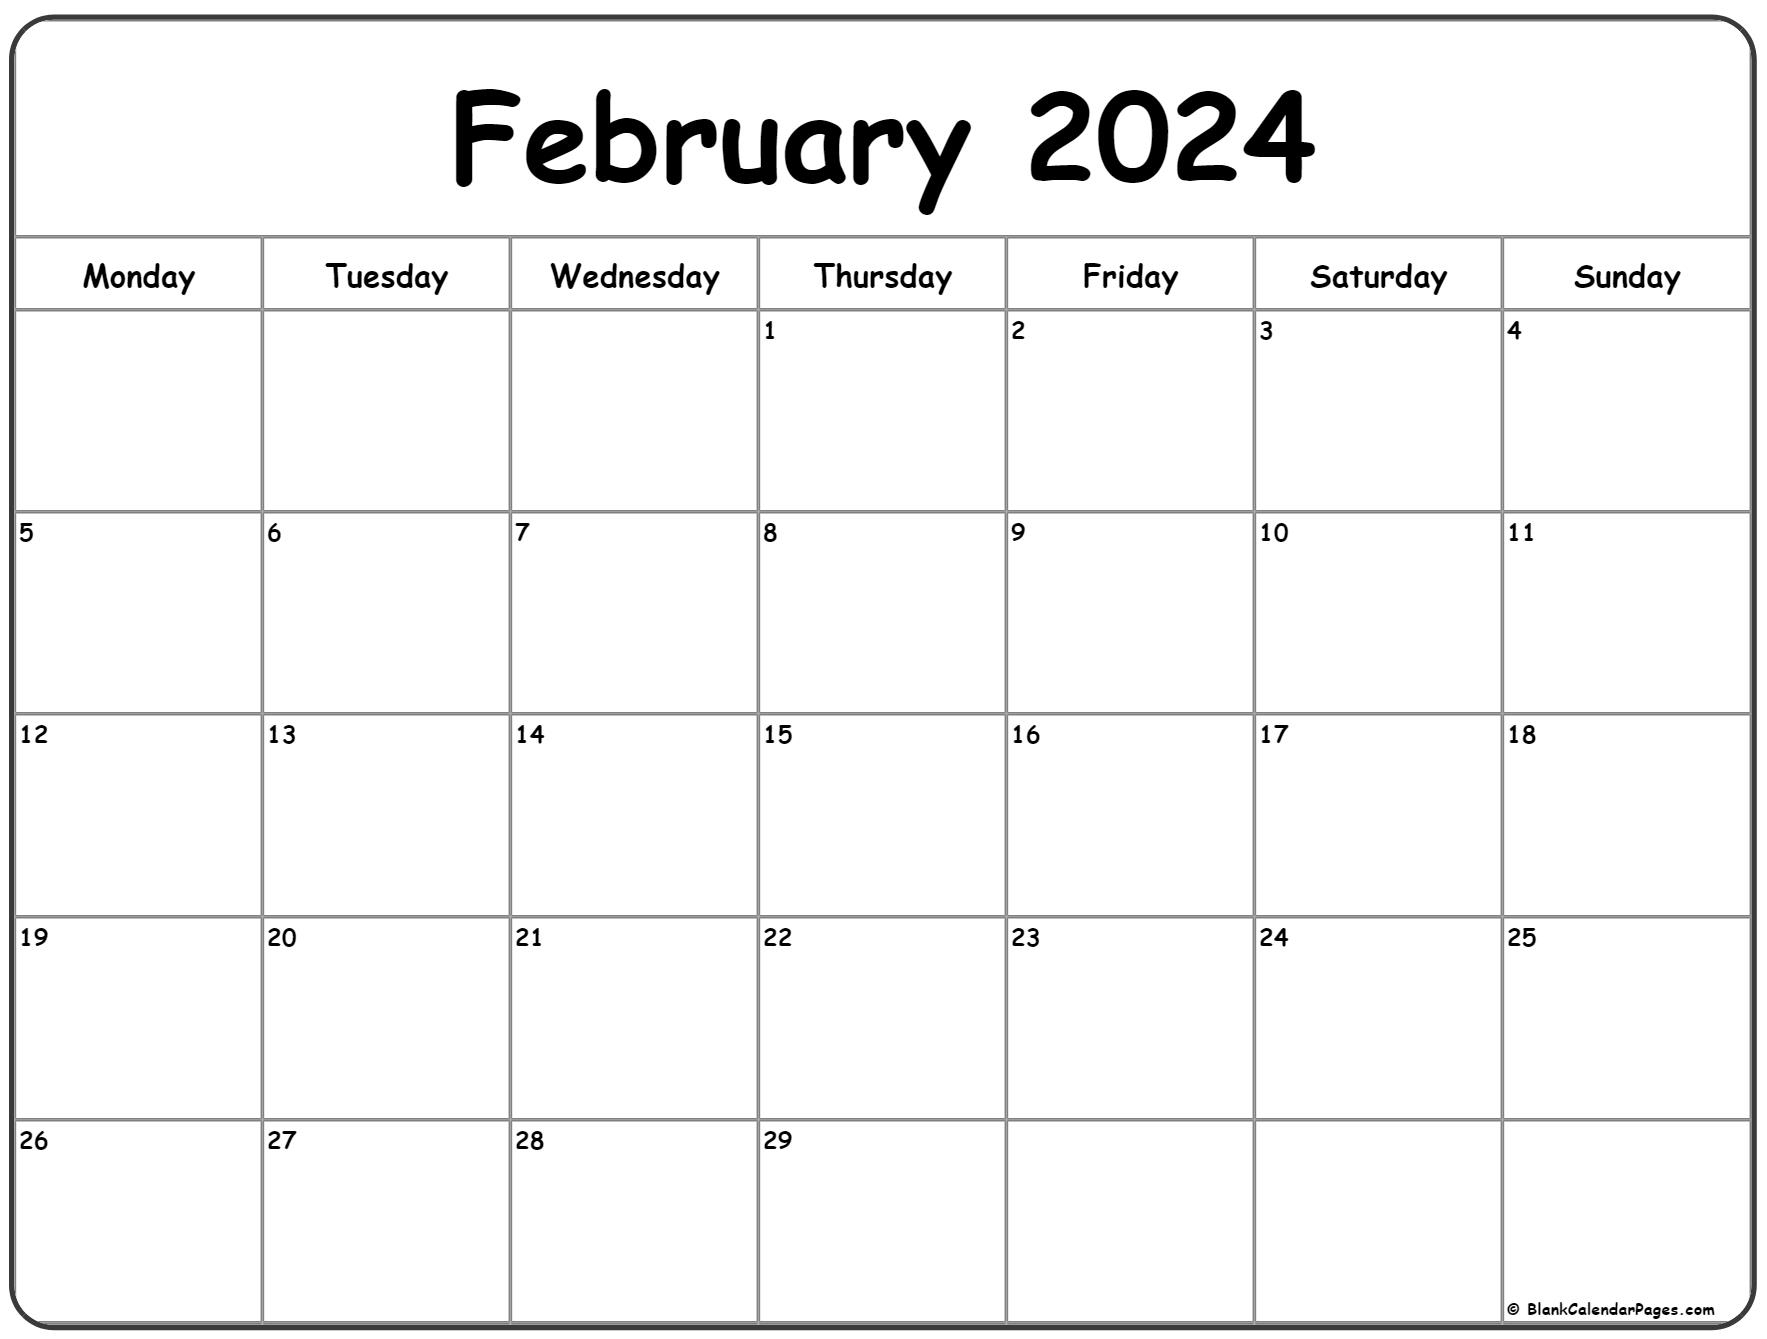 February 2024 Monday Calendar | Monday To Sunday for Free Printable 2024 February Calendar